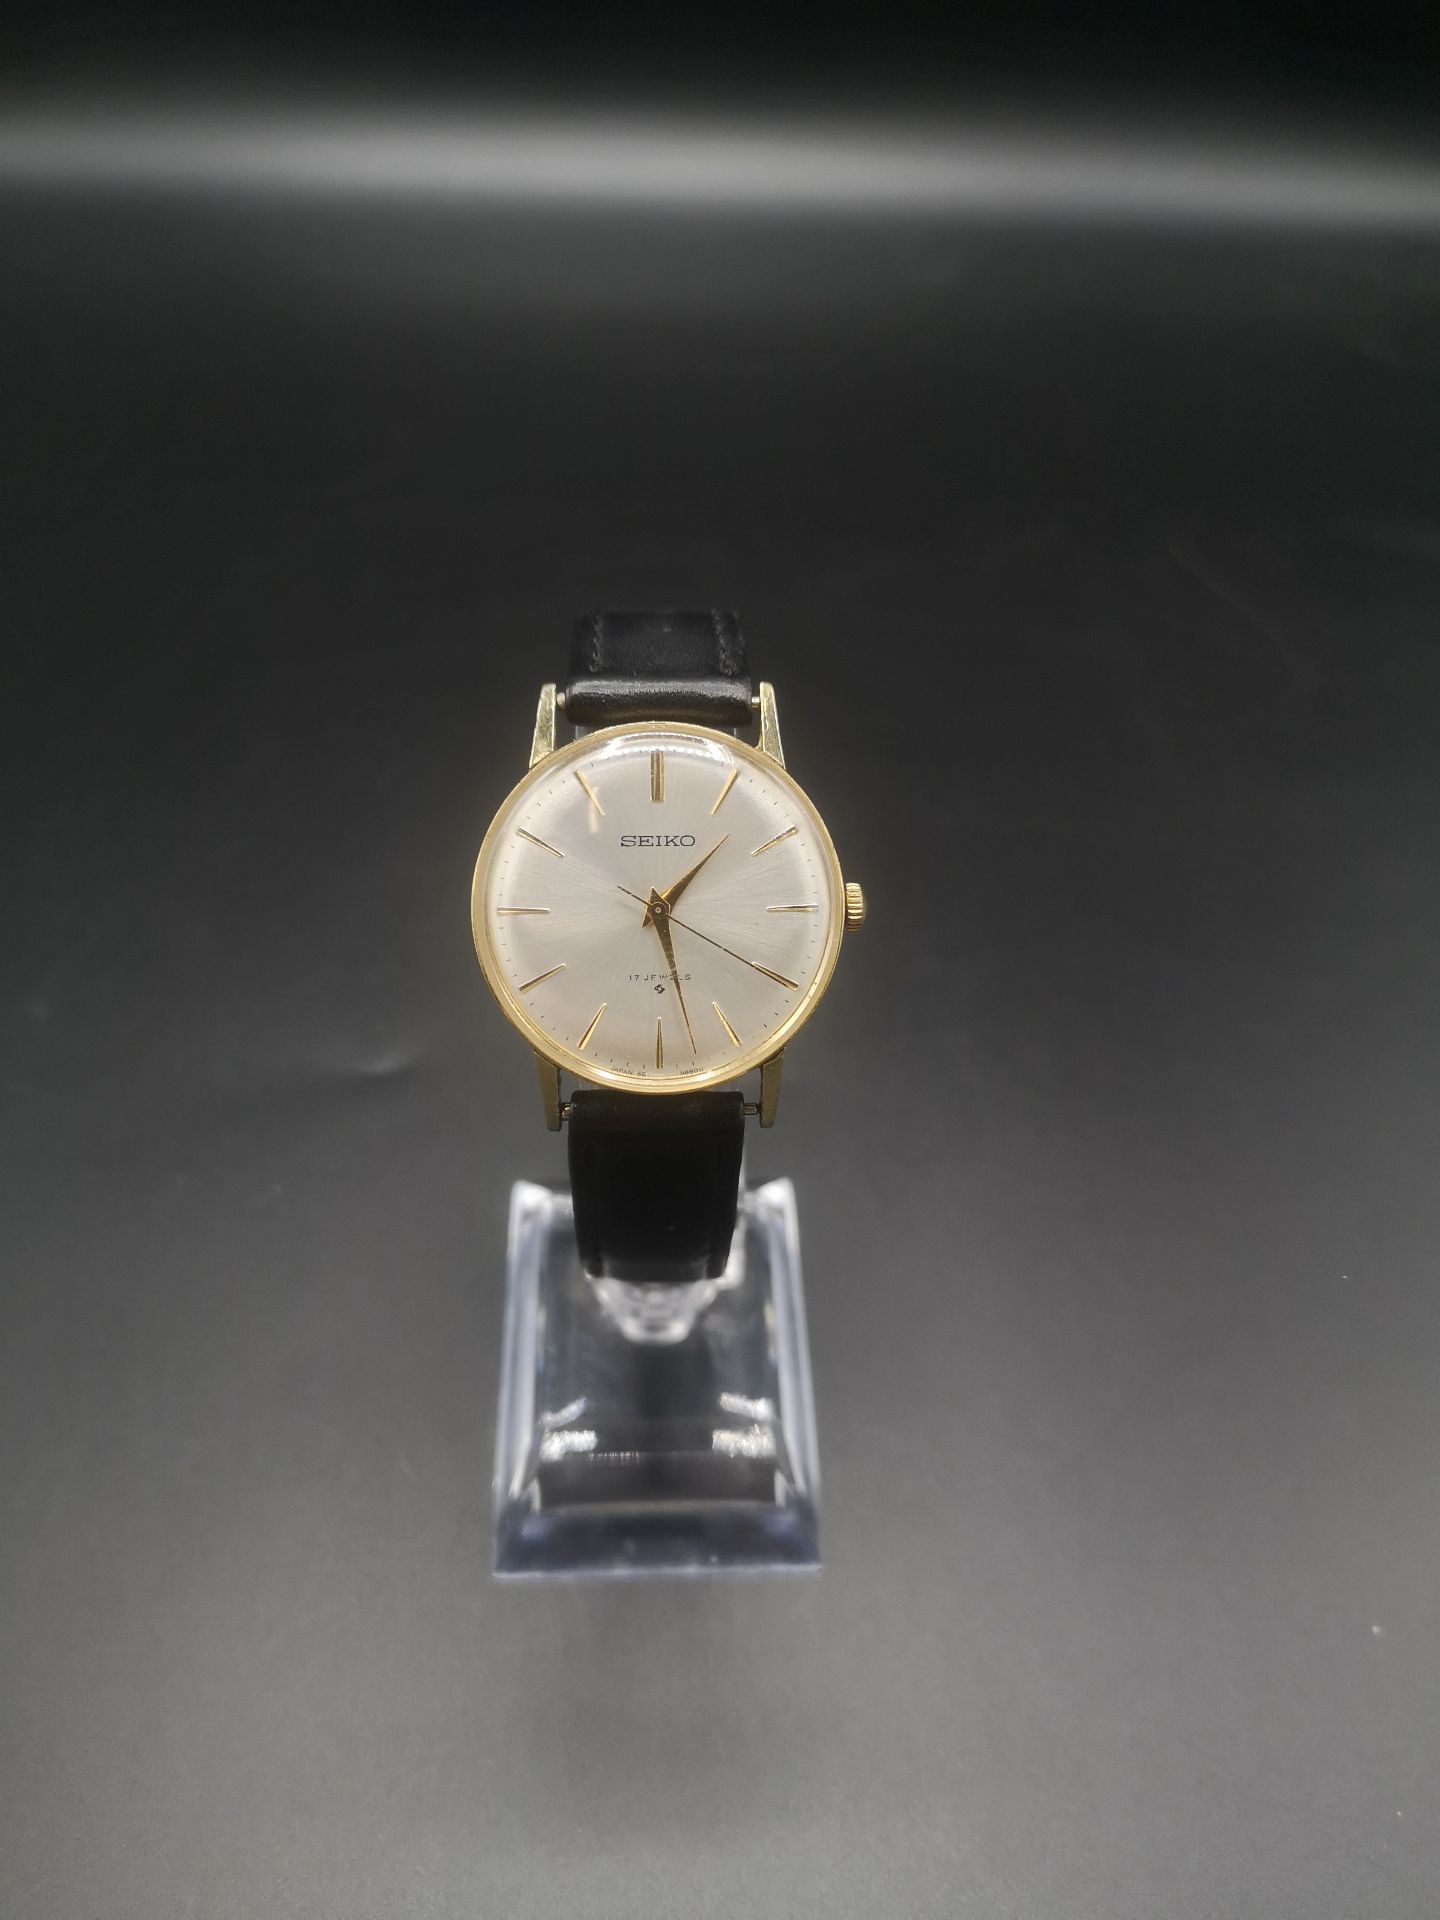 Seiko wrist watch - Image 2 of 4